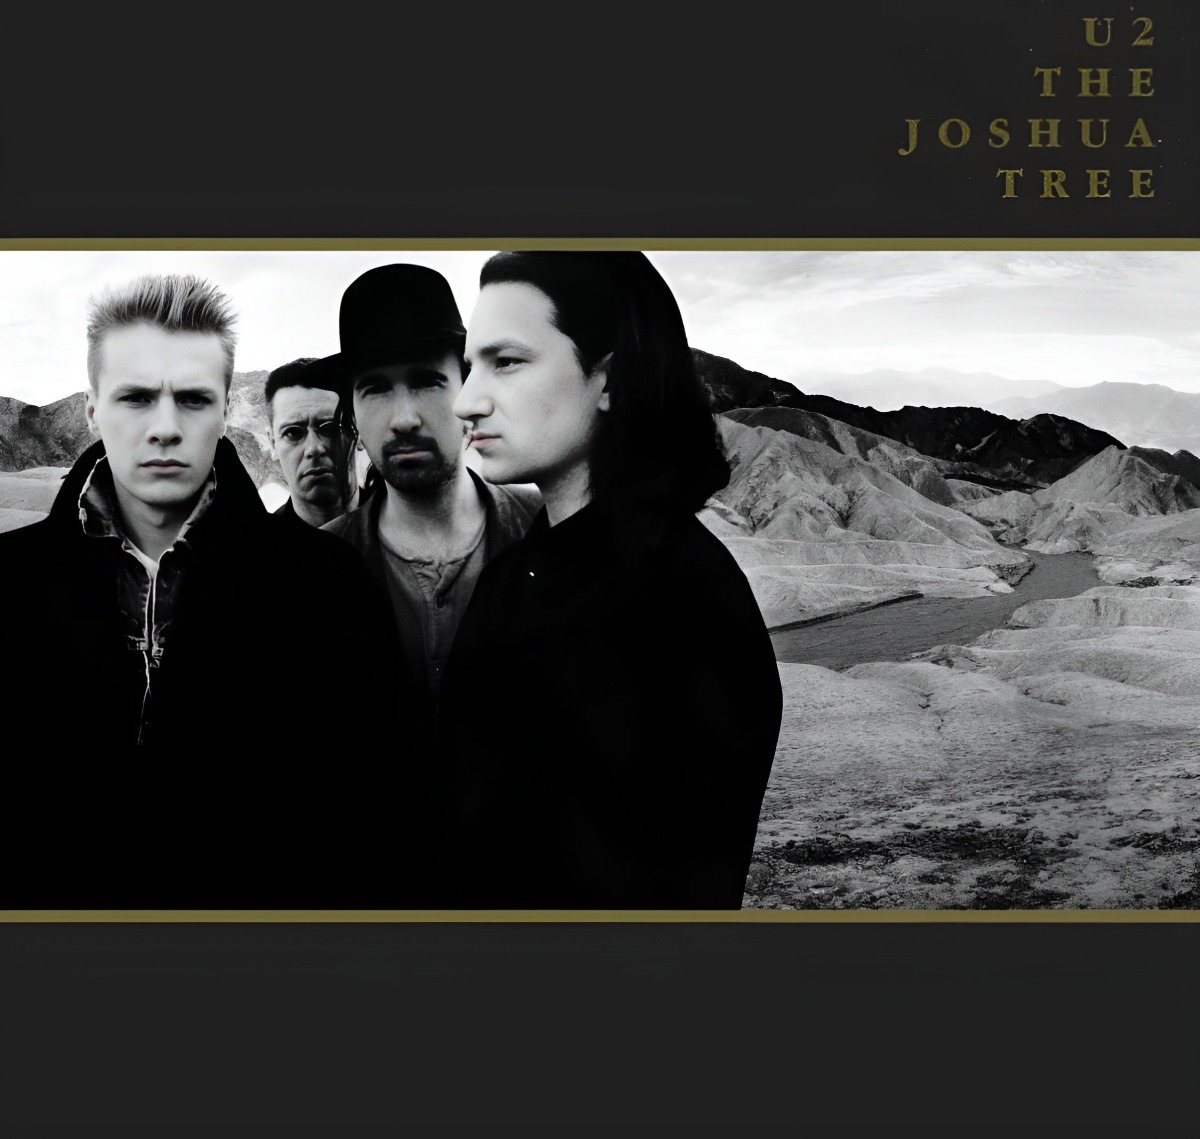 Couverture de l'album "The Joshua Tree" de U2